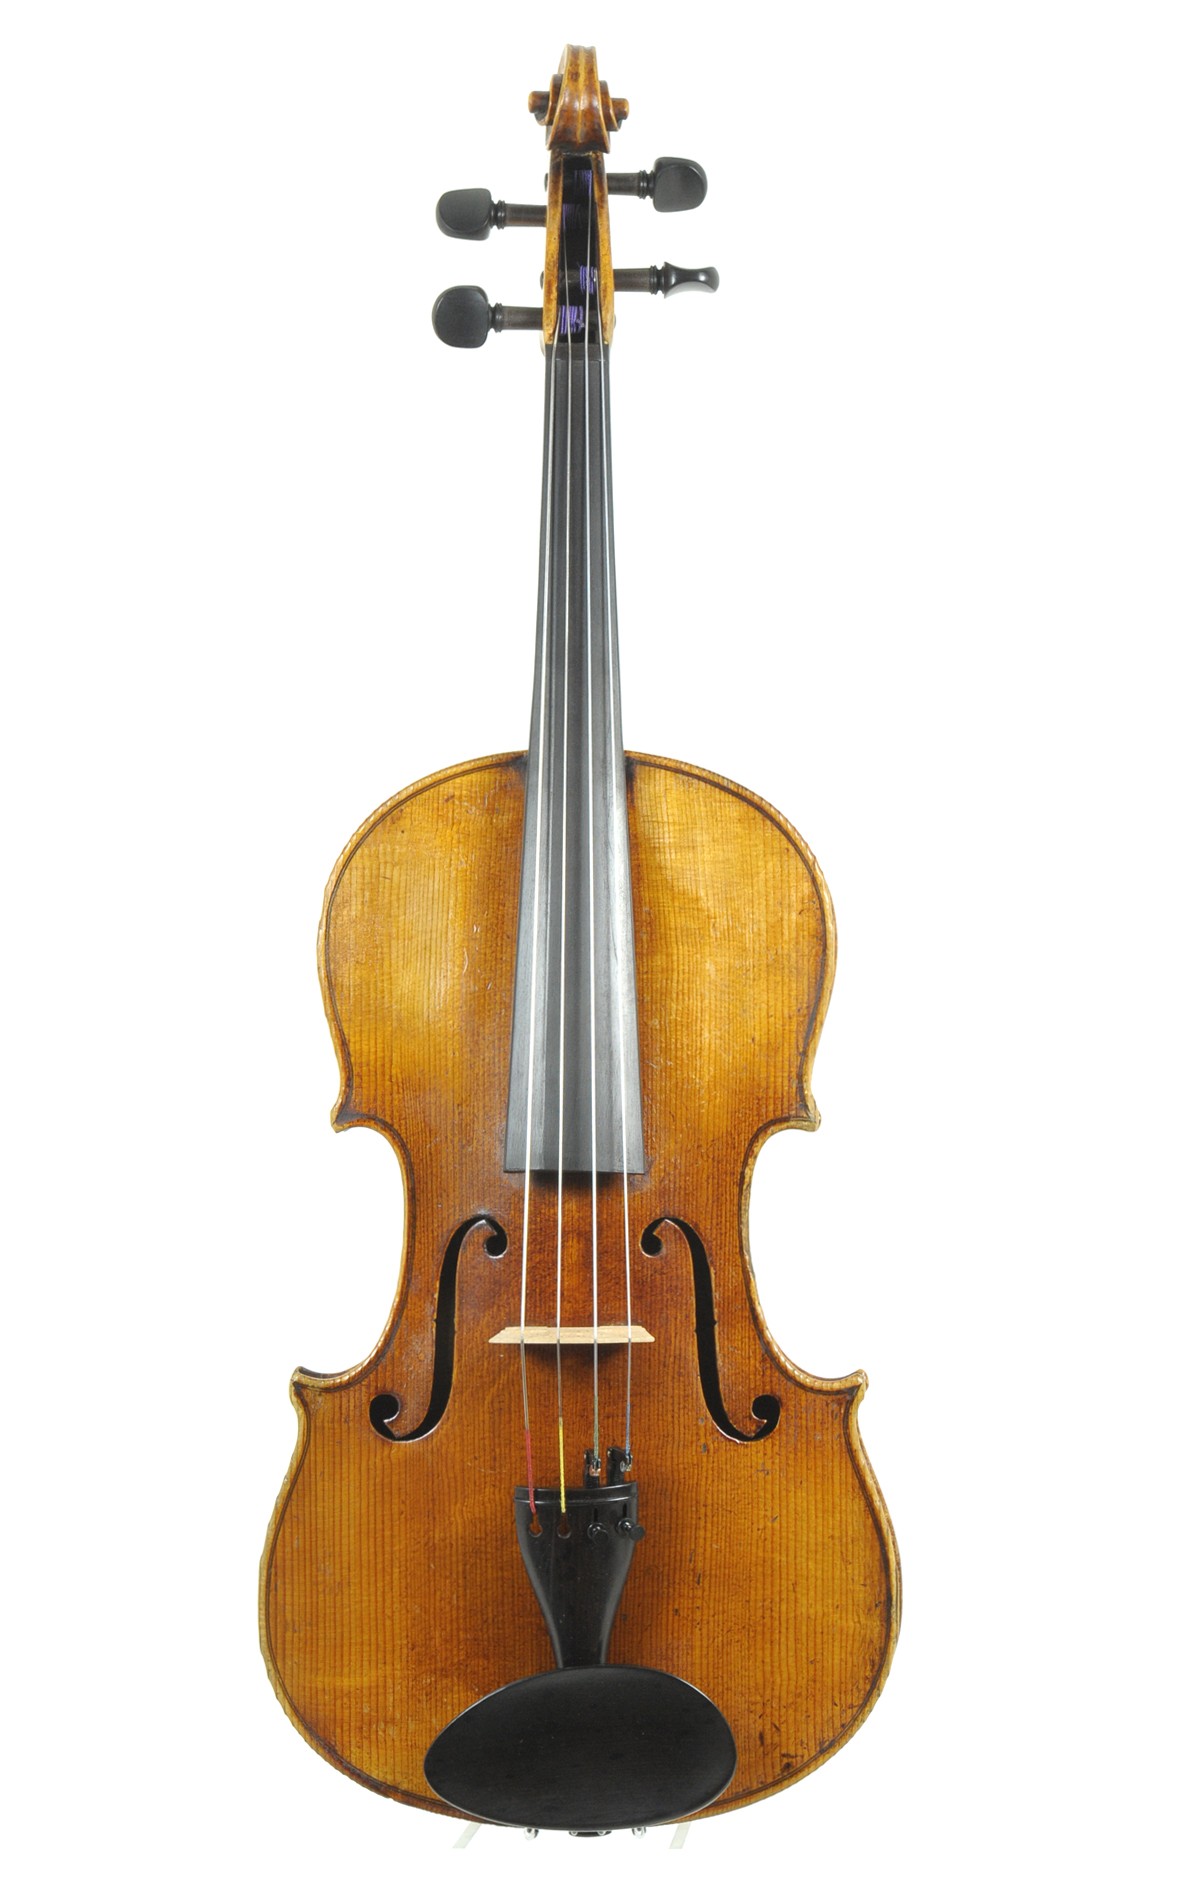 Good viola, Germany around 1900 - top